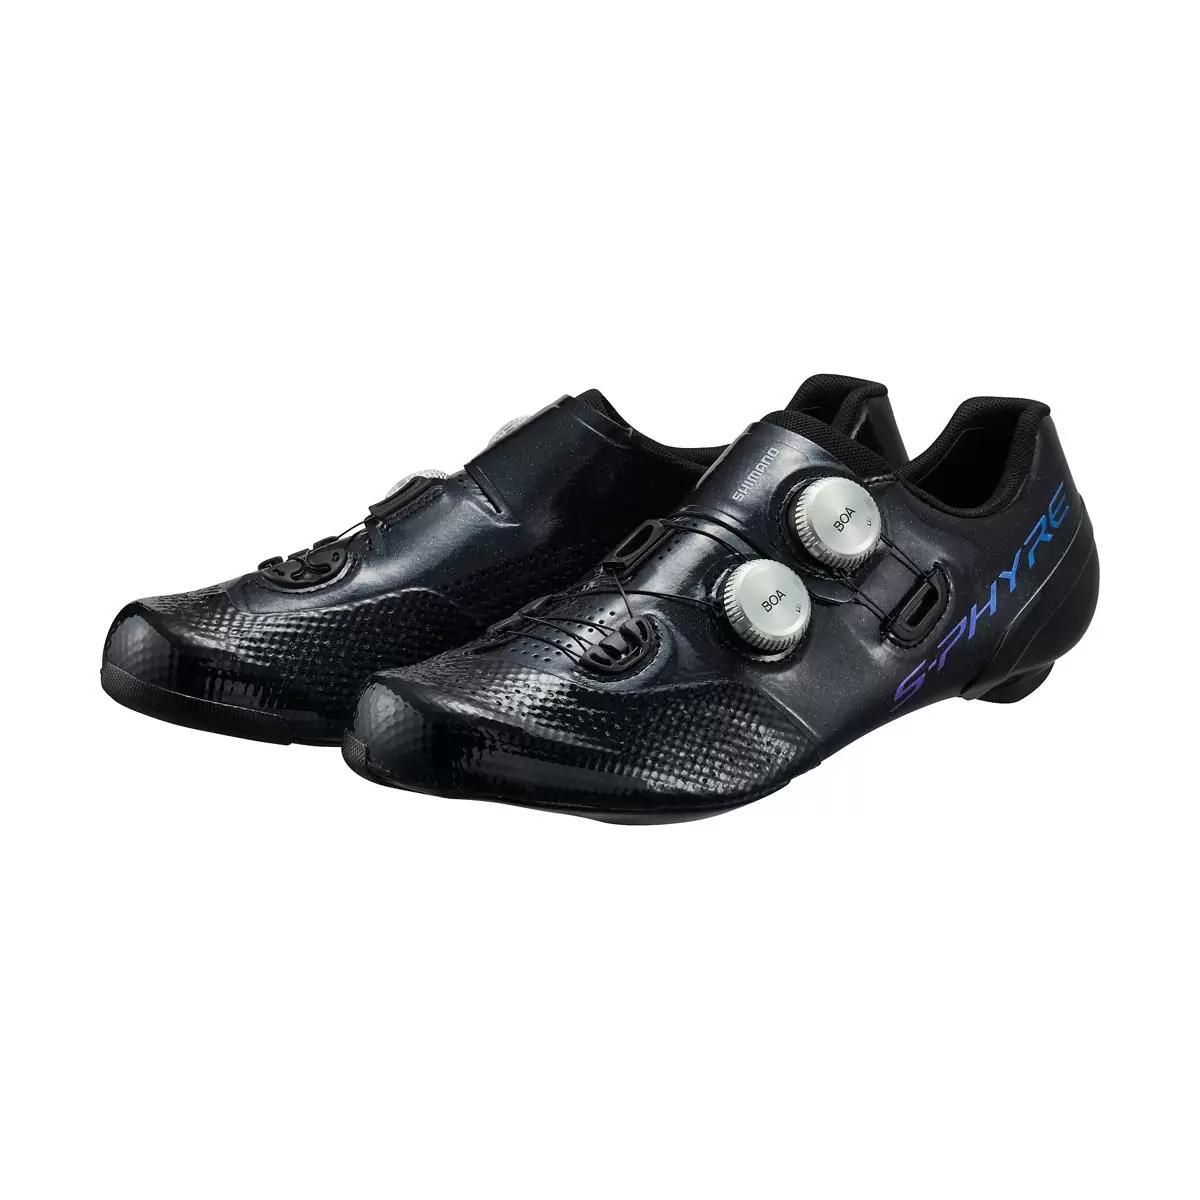 Chaussures route RC9 S-PHYRE SH-RC902S Noir Edition limitée taille 46 #1